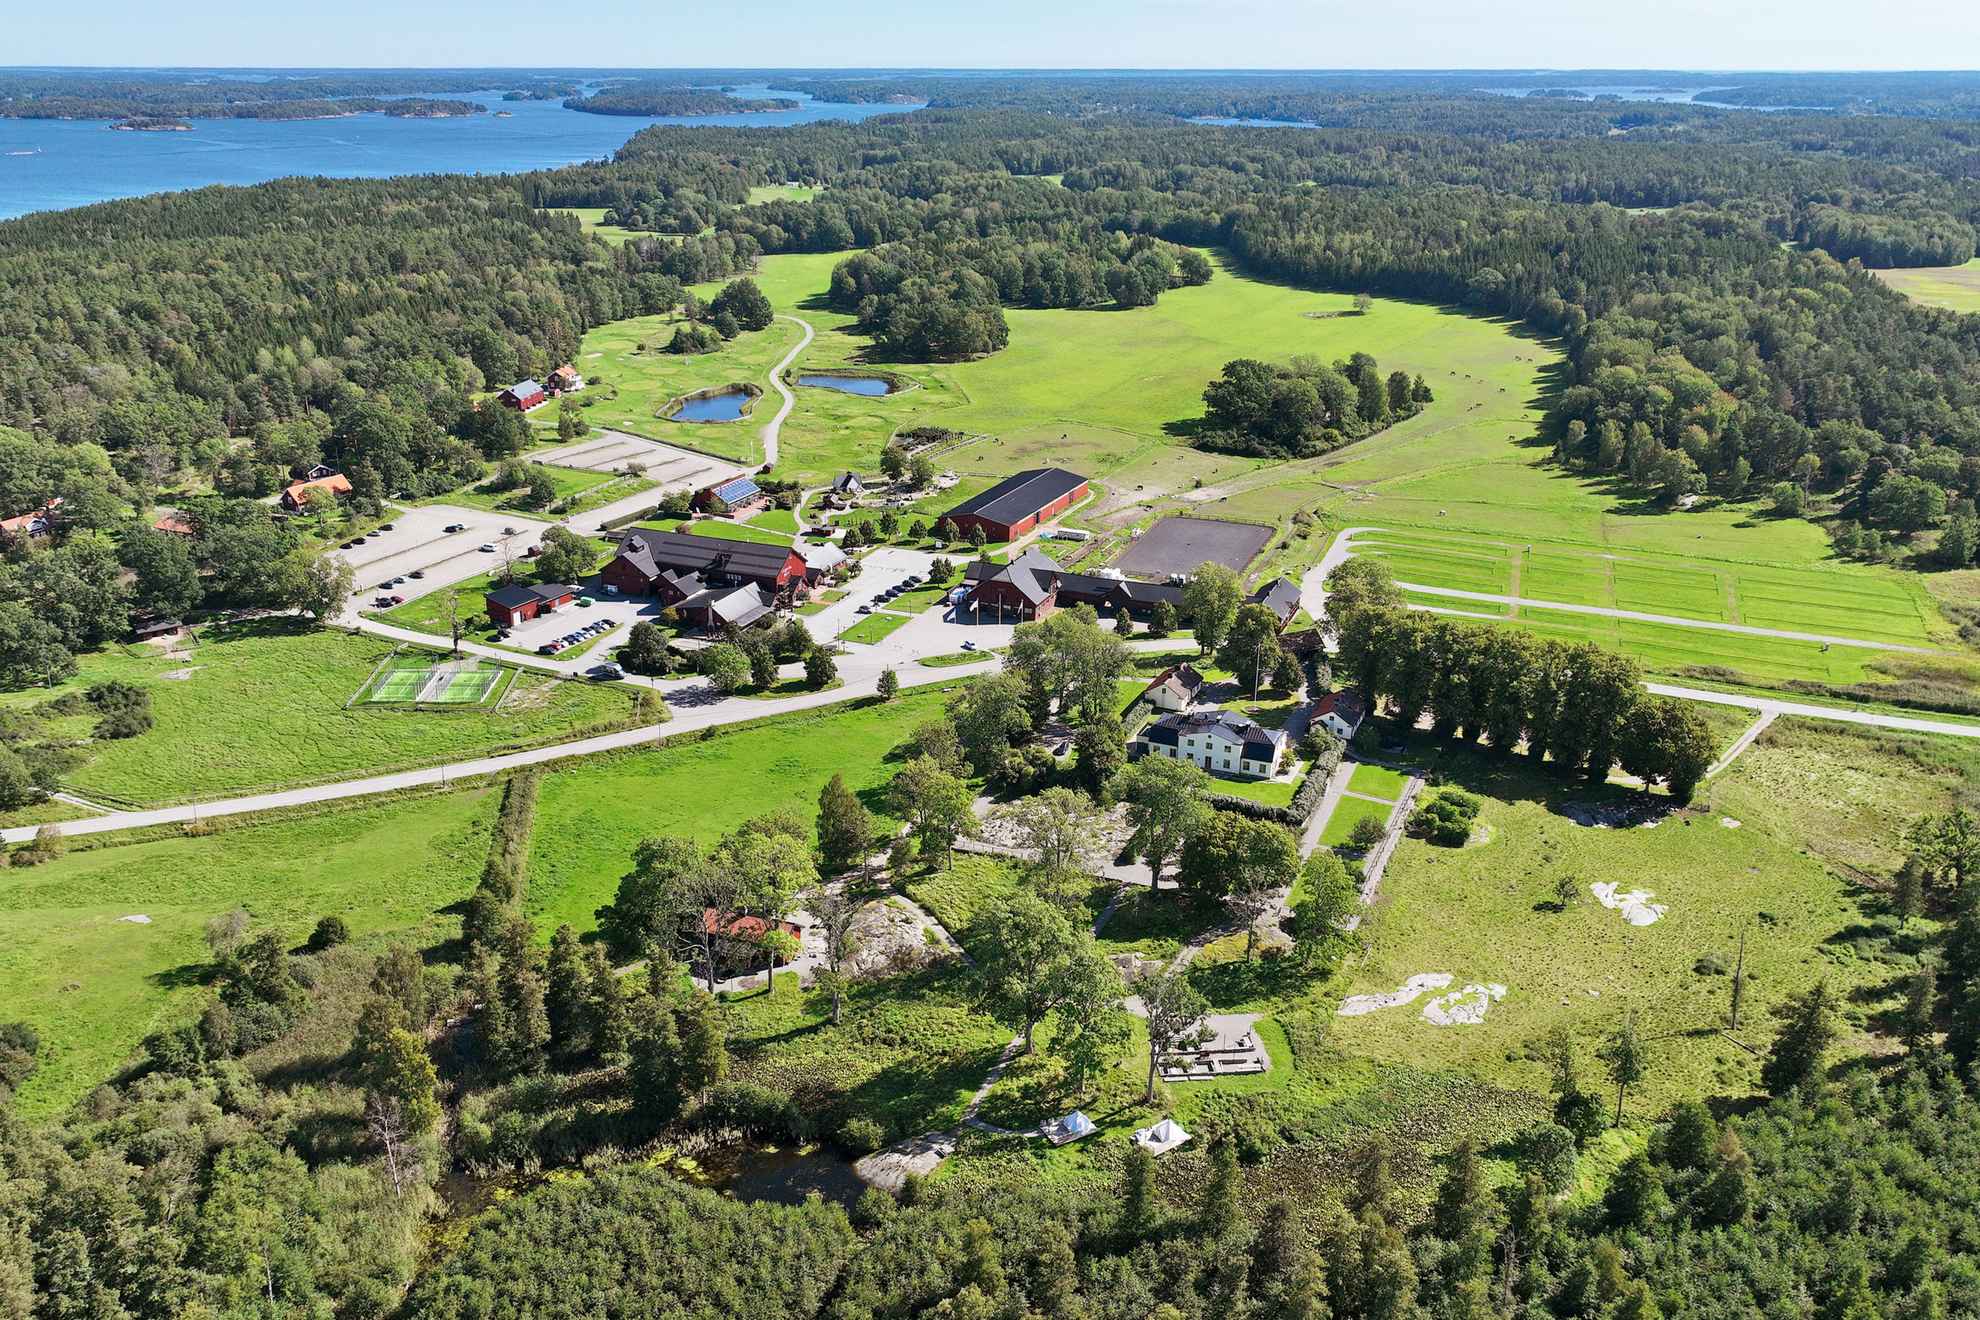 An aerial image of Siggesta Gård during the summer.